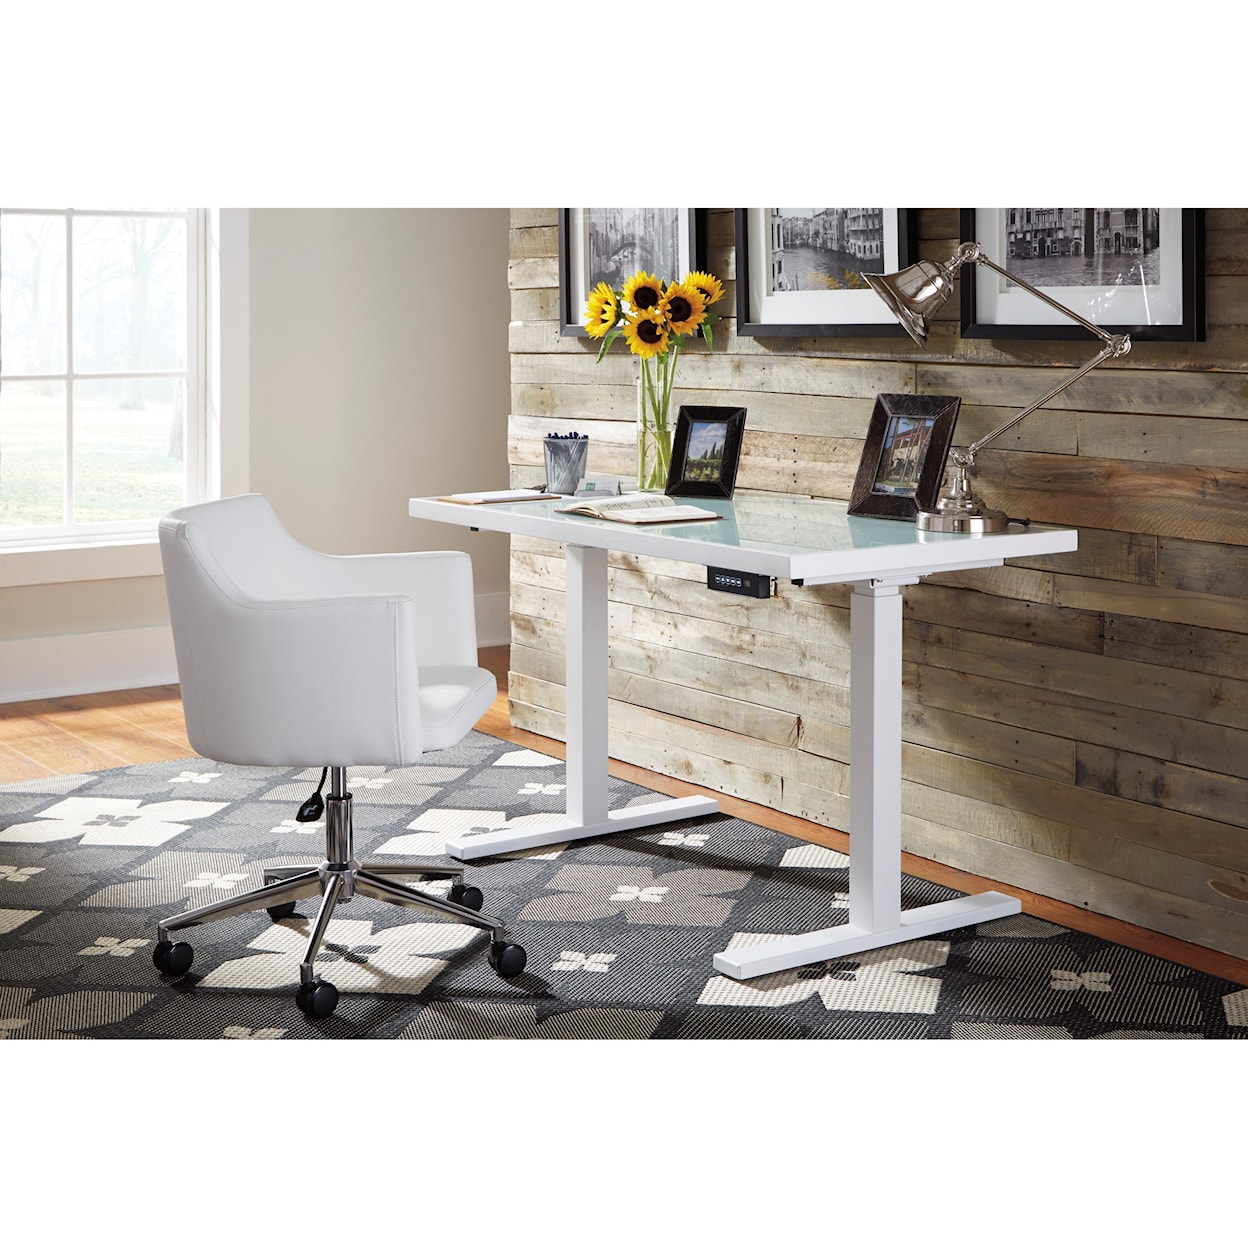 Signature Design by Ashley Baraga Home Office Swivel Desk Chair